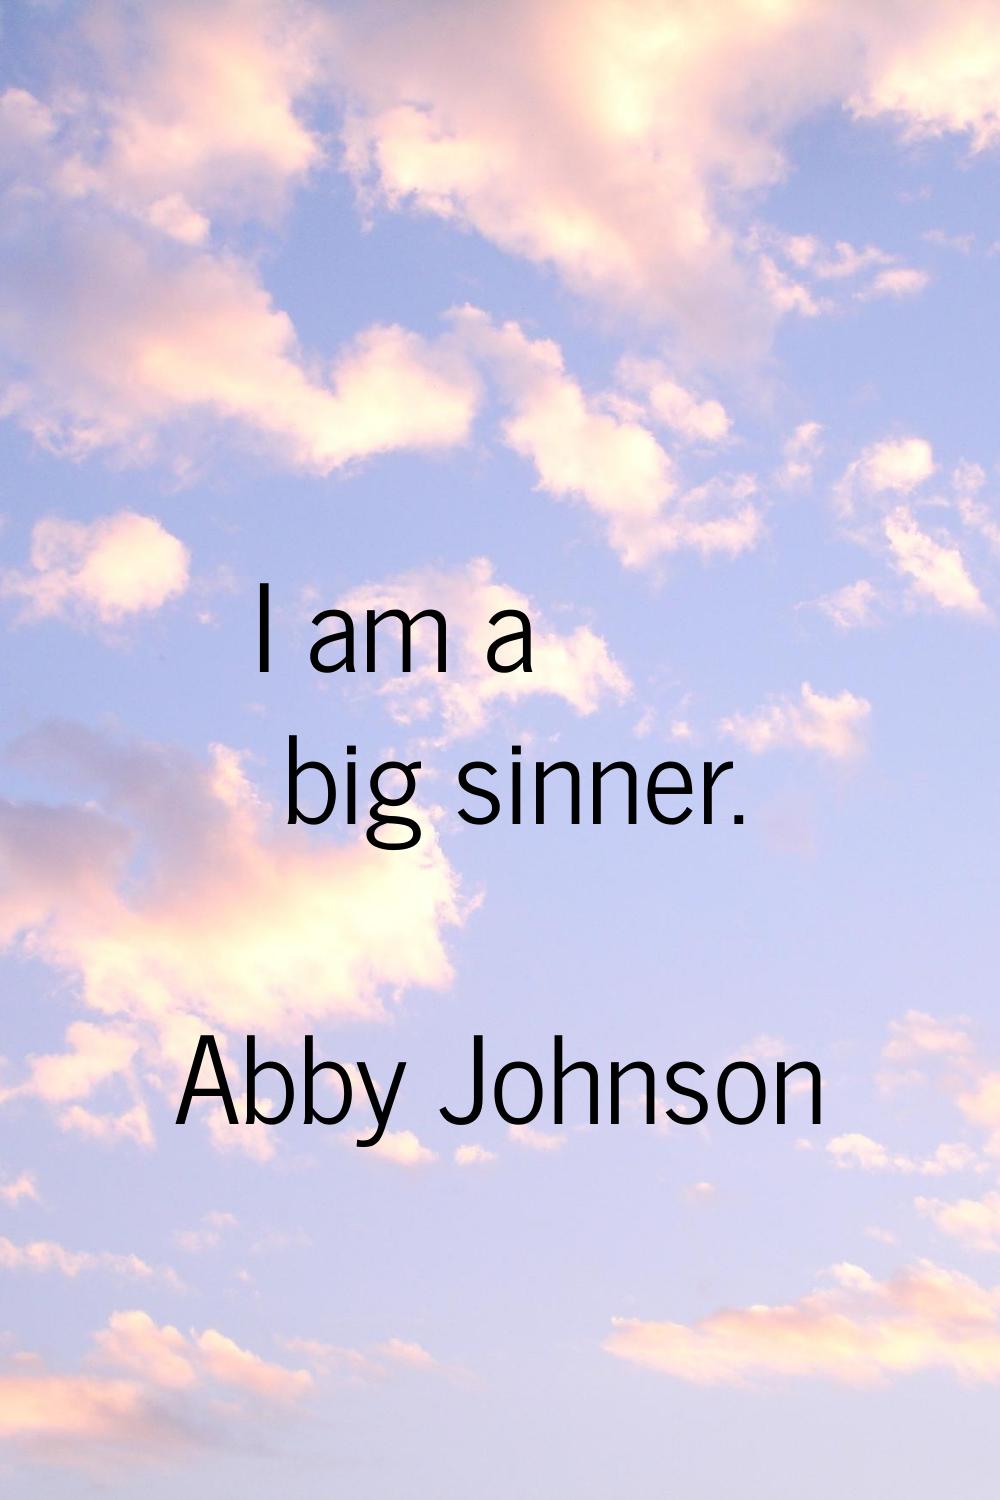 I am a big sinner.